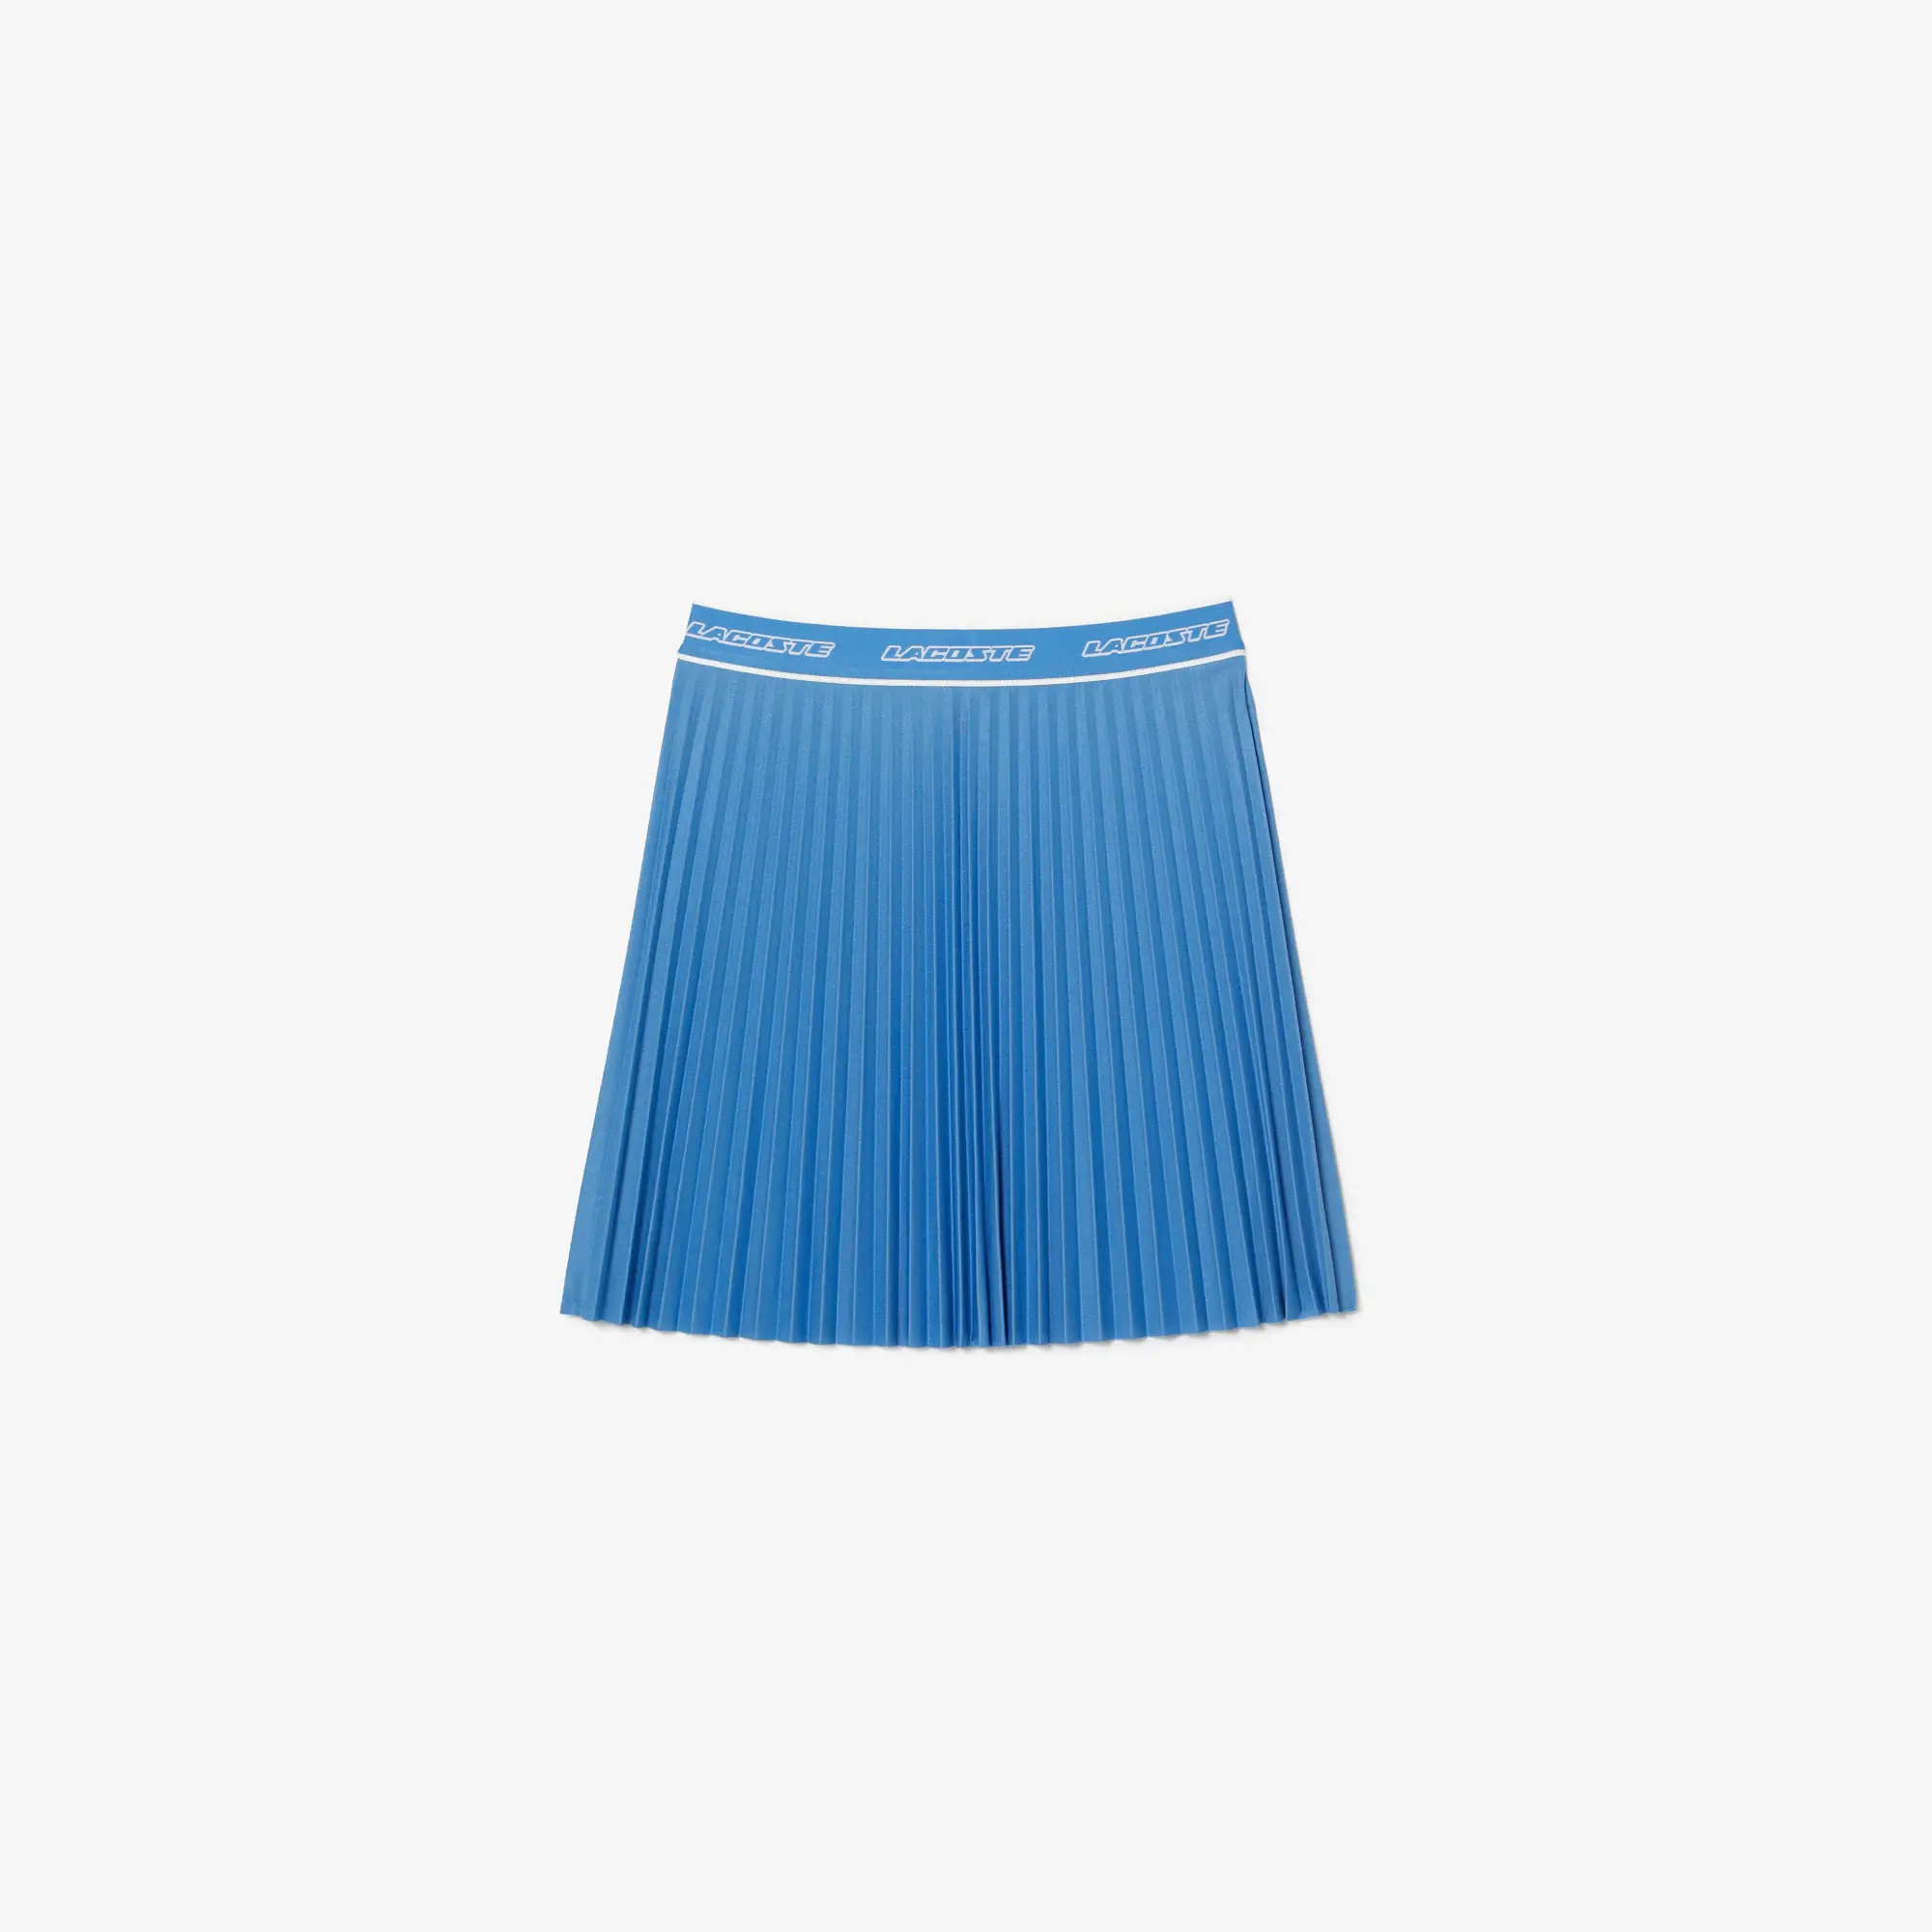 Lacoste Women's Pleated Skirt. 2